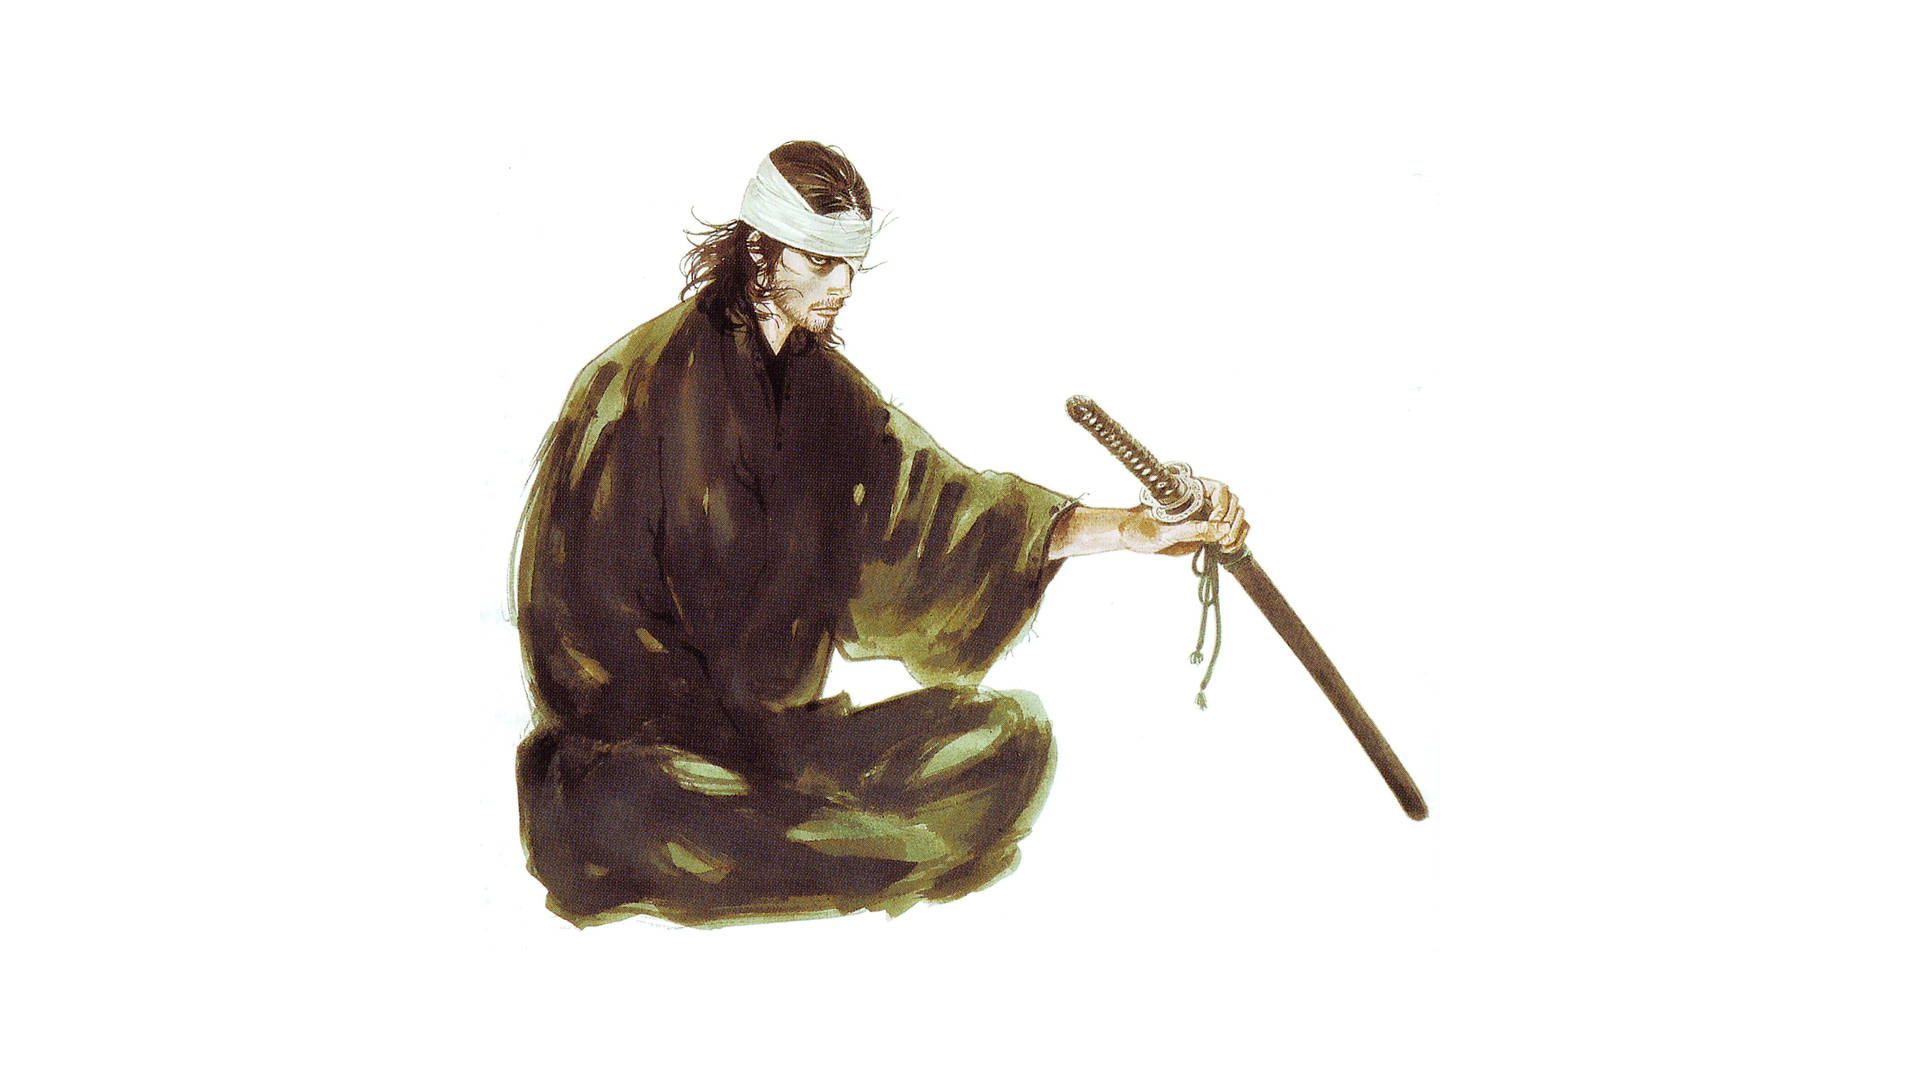 Musashi Vagabond Holding Sword Wallpaper